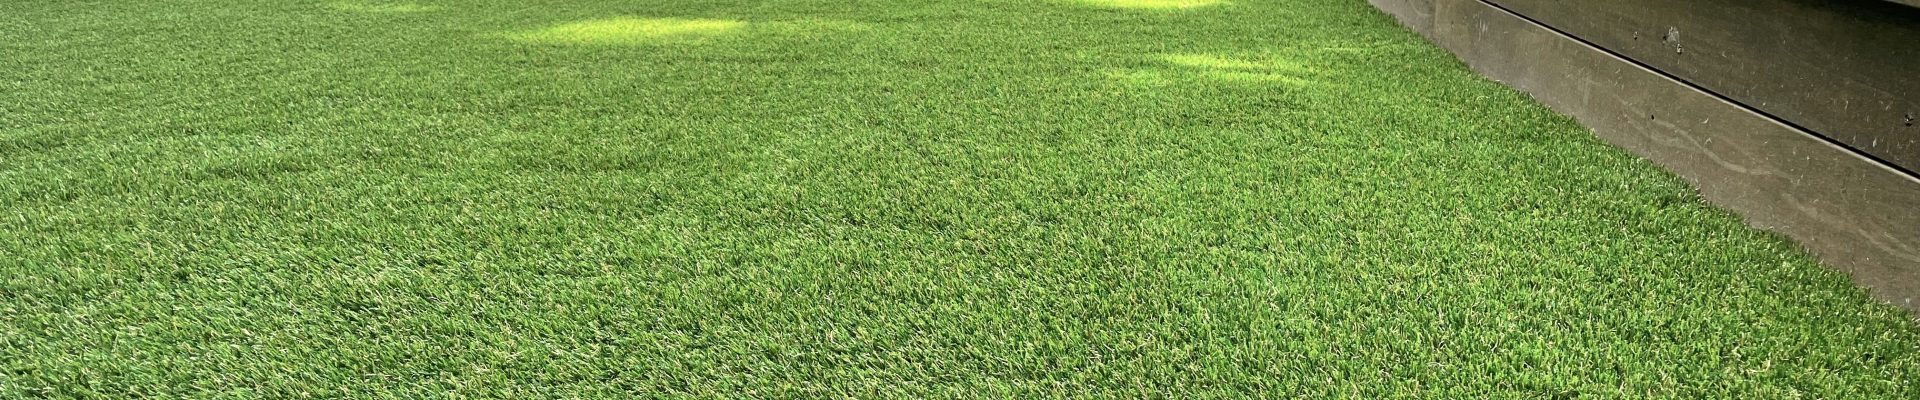 DIY artificial grass turf supply